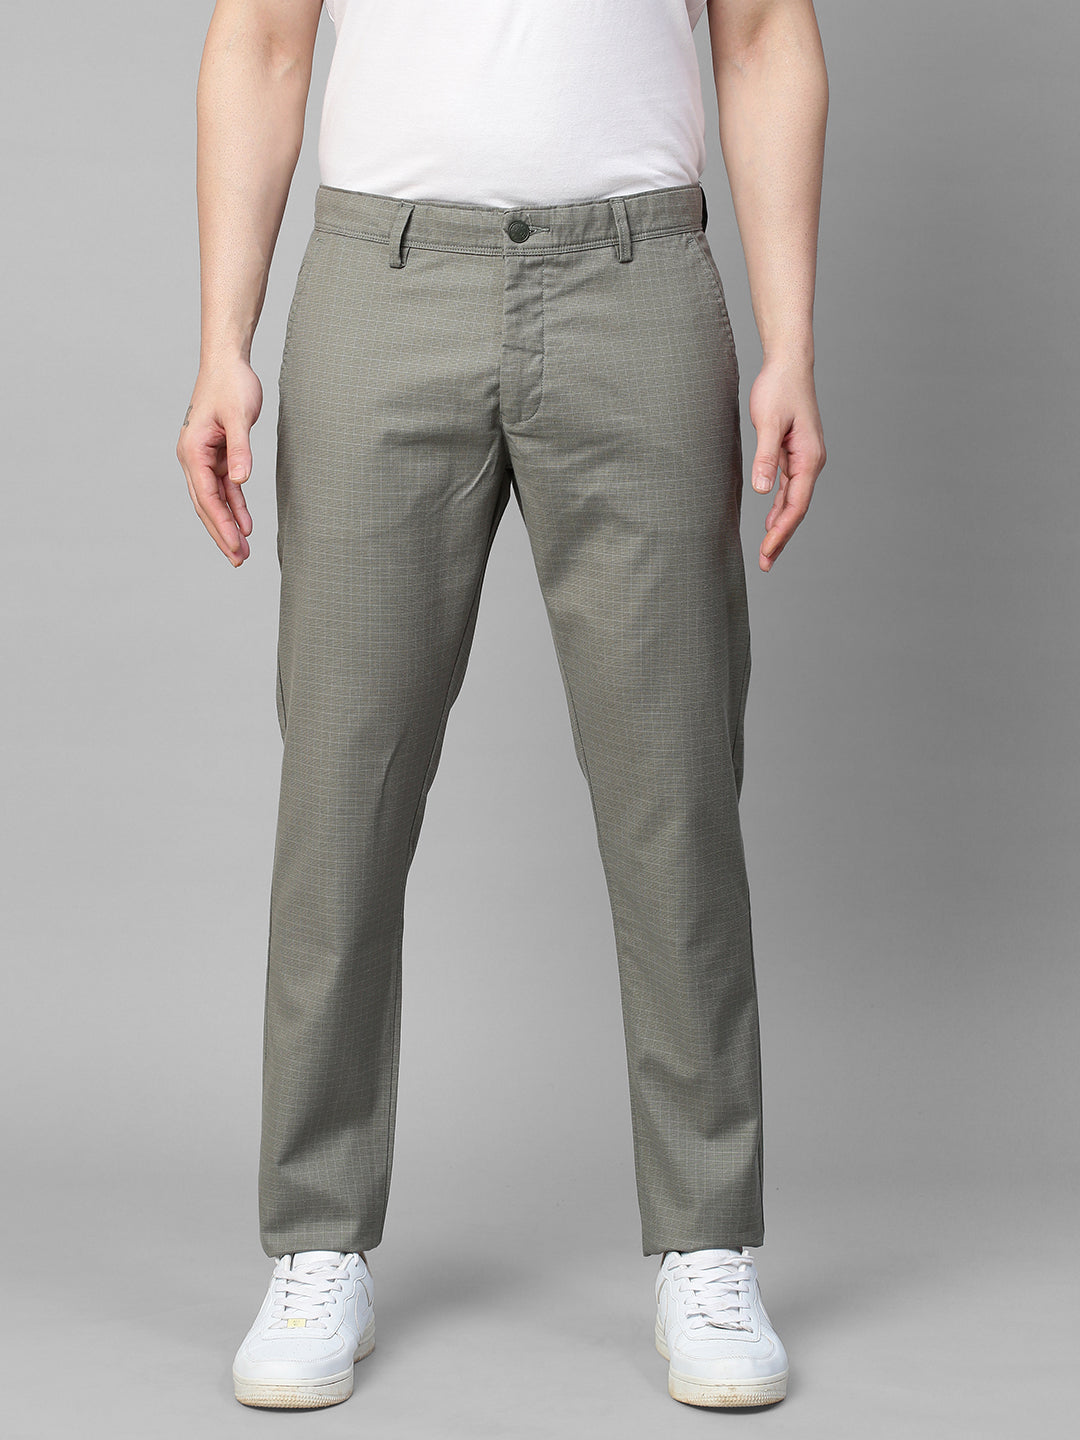 Genips Men's Green Cotton Stretch Caribbean Slim Fit Self Design Trousers